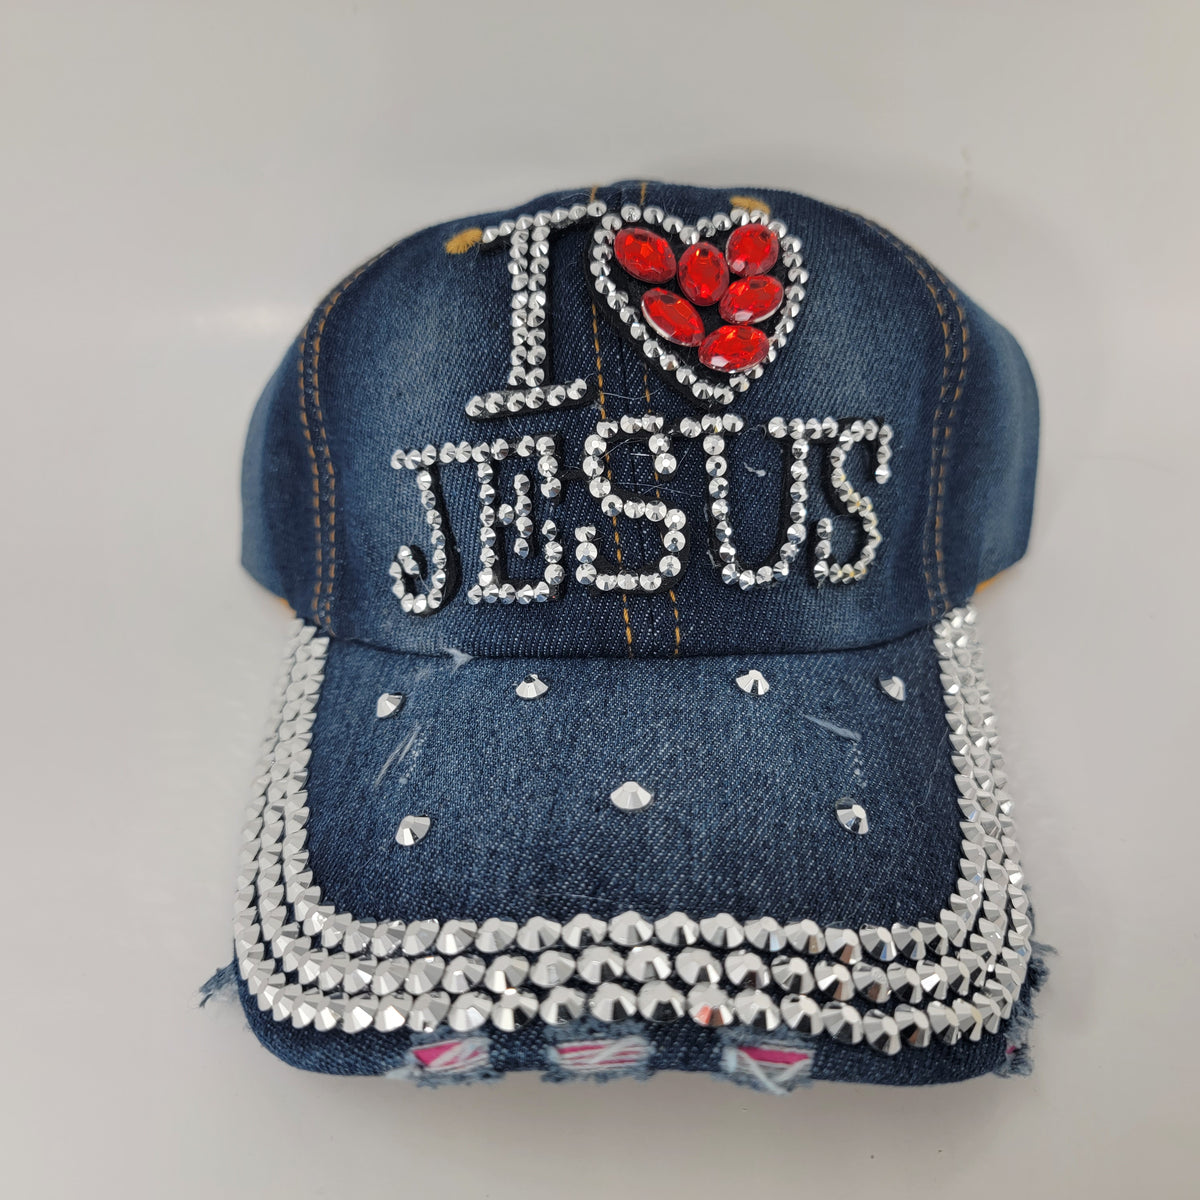 "I Love Jesus" Rhinestone Denim Cap - Shiny Bling Sports I Love Jesus Cap